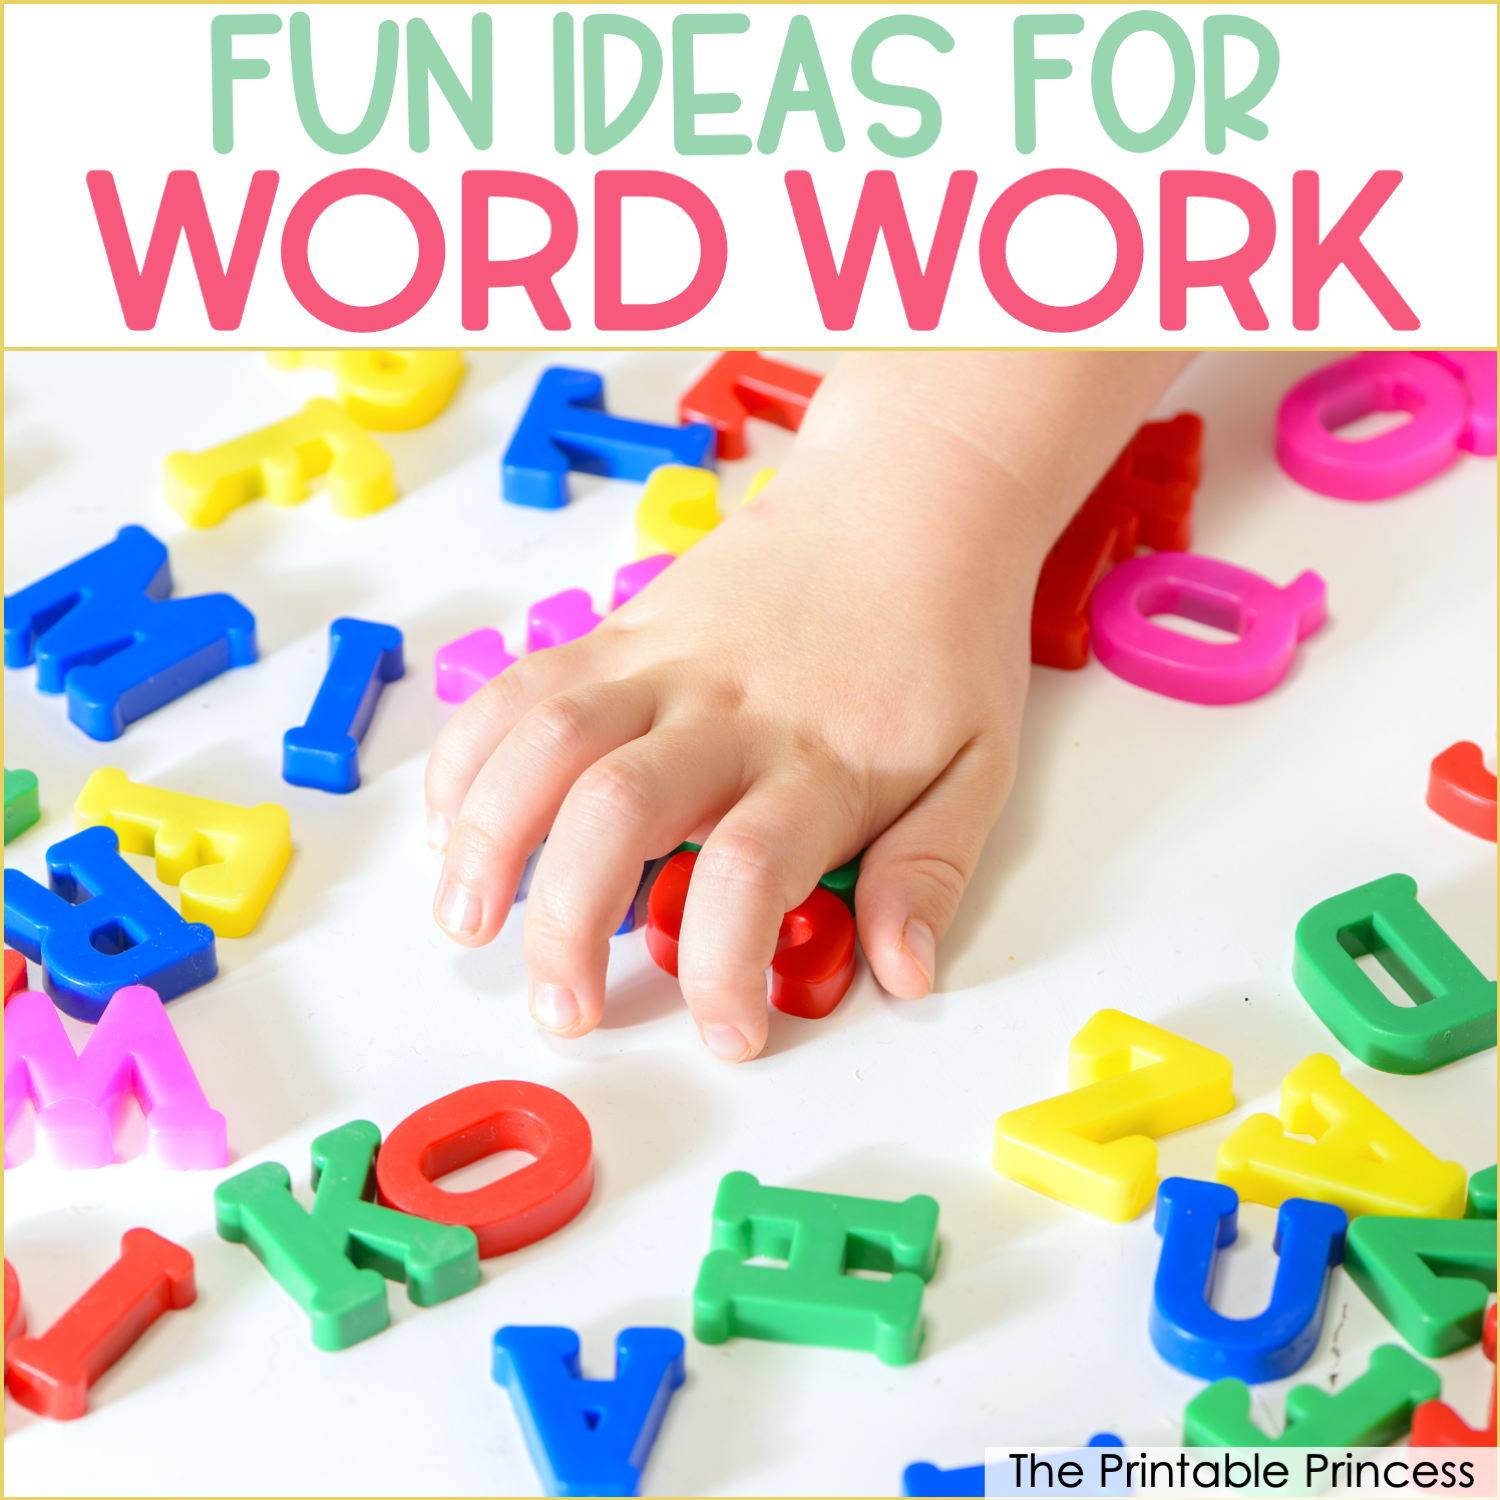 8 Activities to Make Word Work More Fun